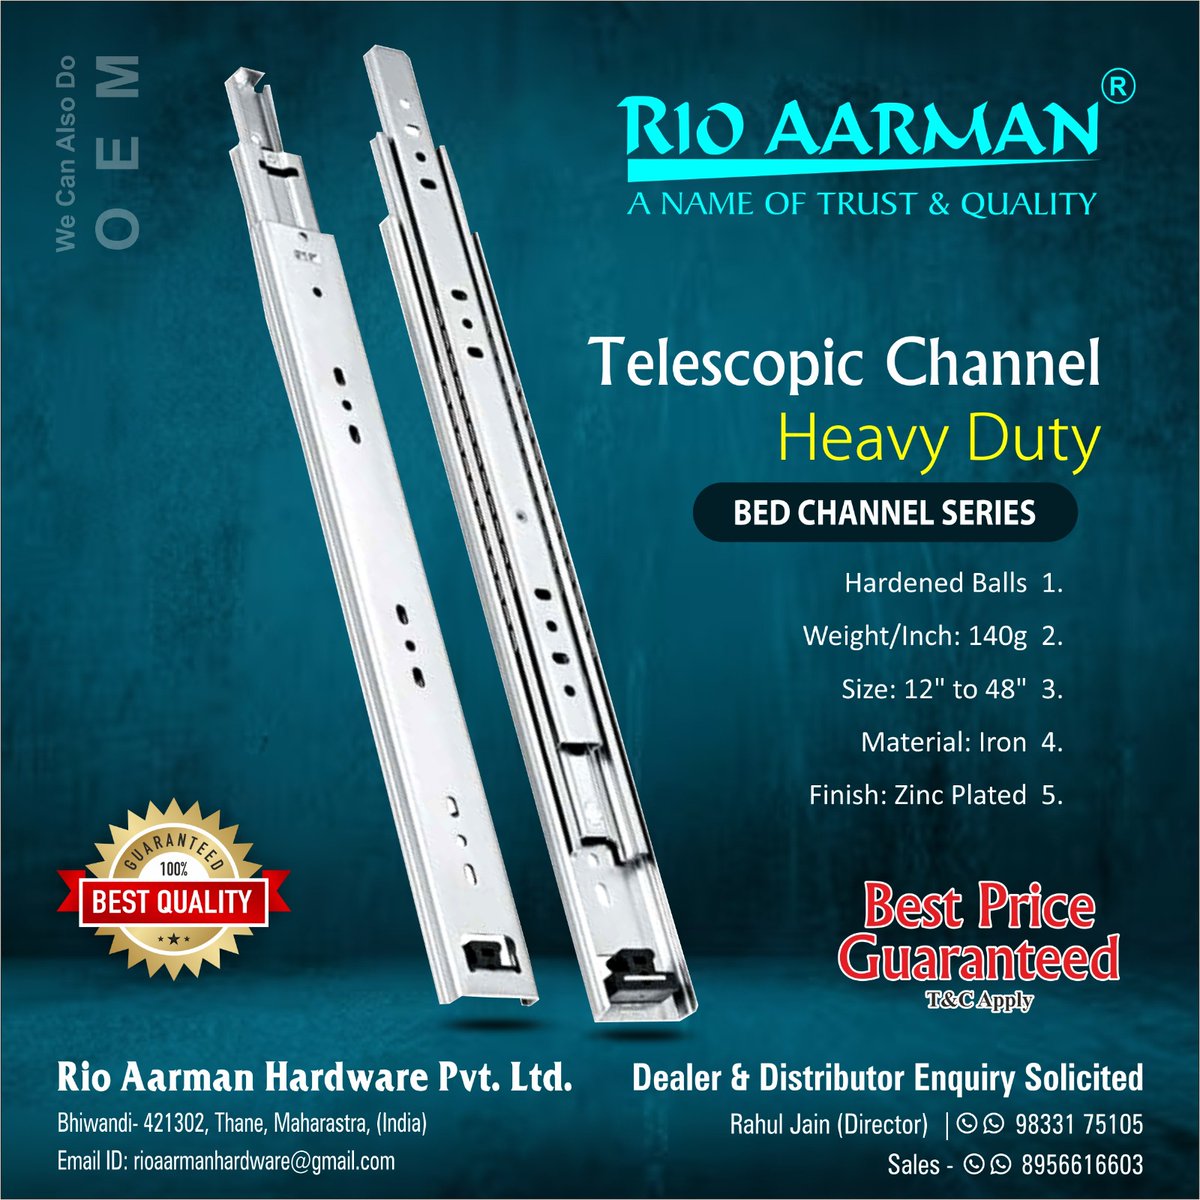 “𝐑𝐈𝐎 𝐀𝐀𝐑𝐌𝐀𝐍 𝐇𝐀𝐑𝐃𝐖𝐀𝐑𝐄' have premium range of Telescopic Channel with excellent features.

#rioaarmanhardware #Aaro #hardwarestore #AutoHinges #SlidingTrackRollers #Tendombox #hardware #OEM